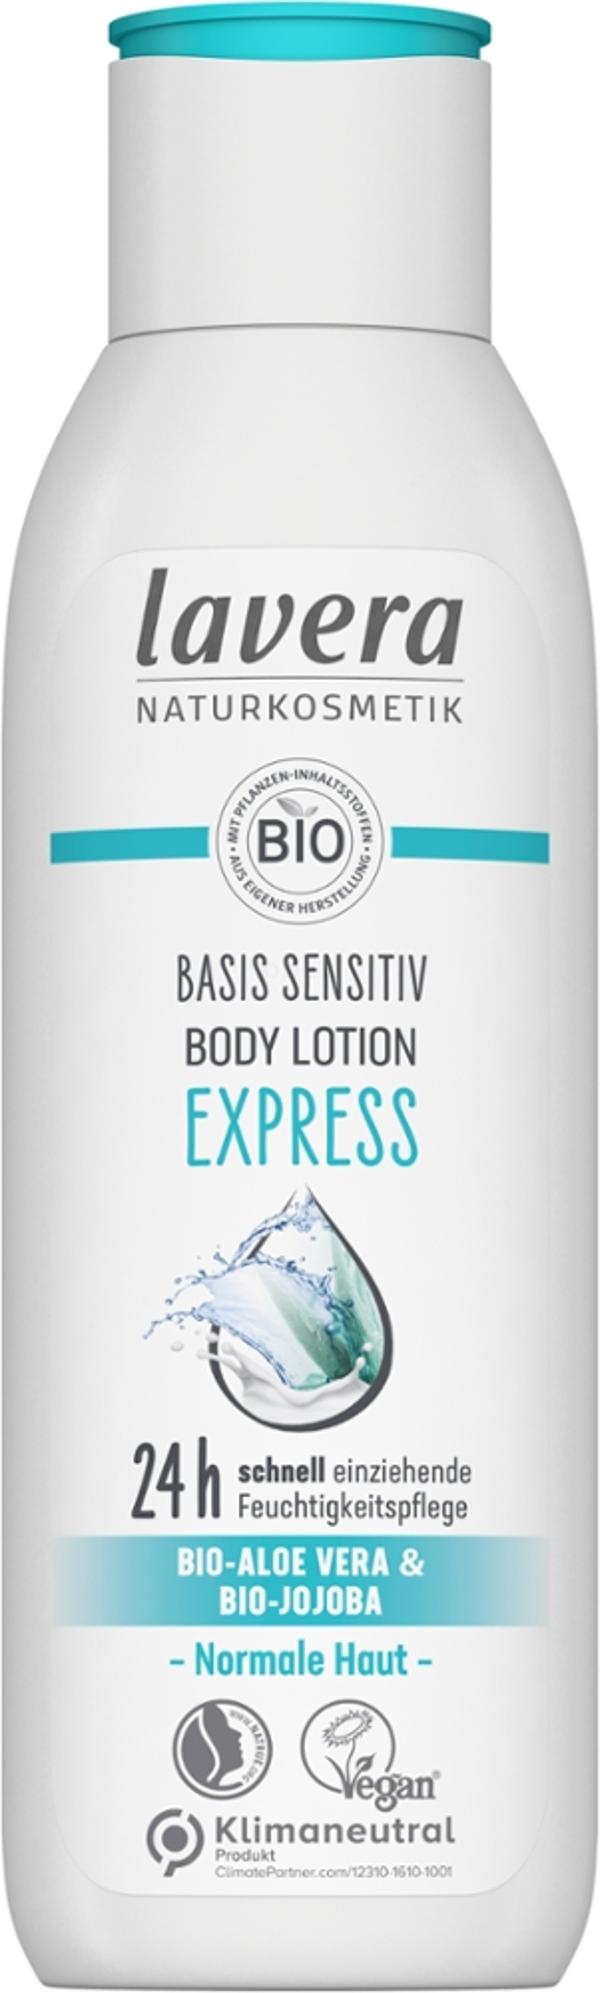 Produktfoto zu Bodylotion Express, Basis Sensitive 250ml